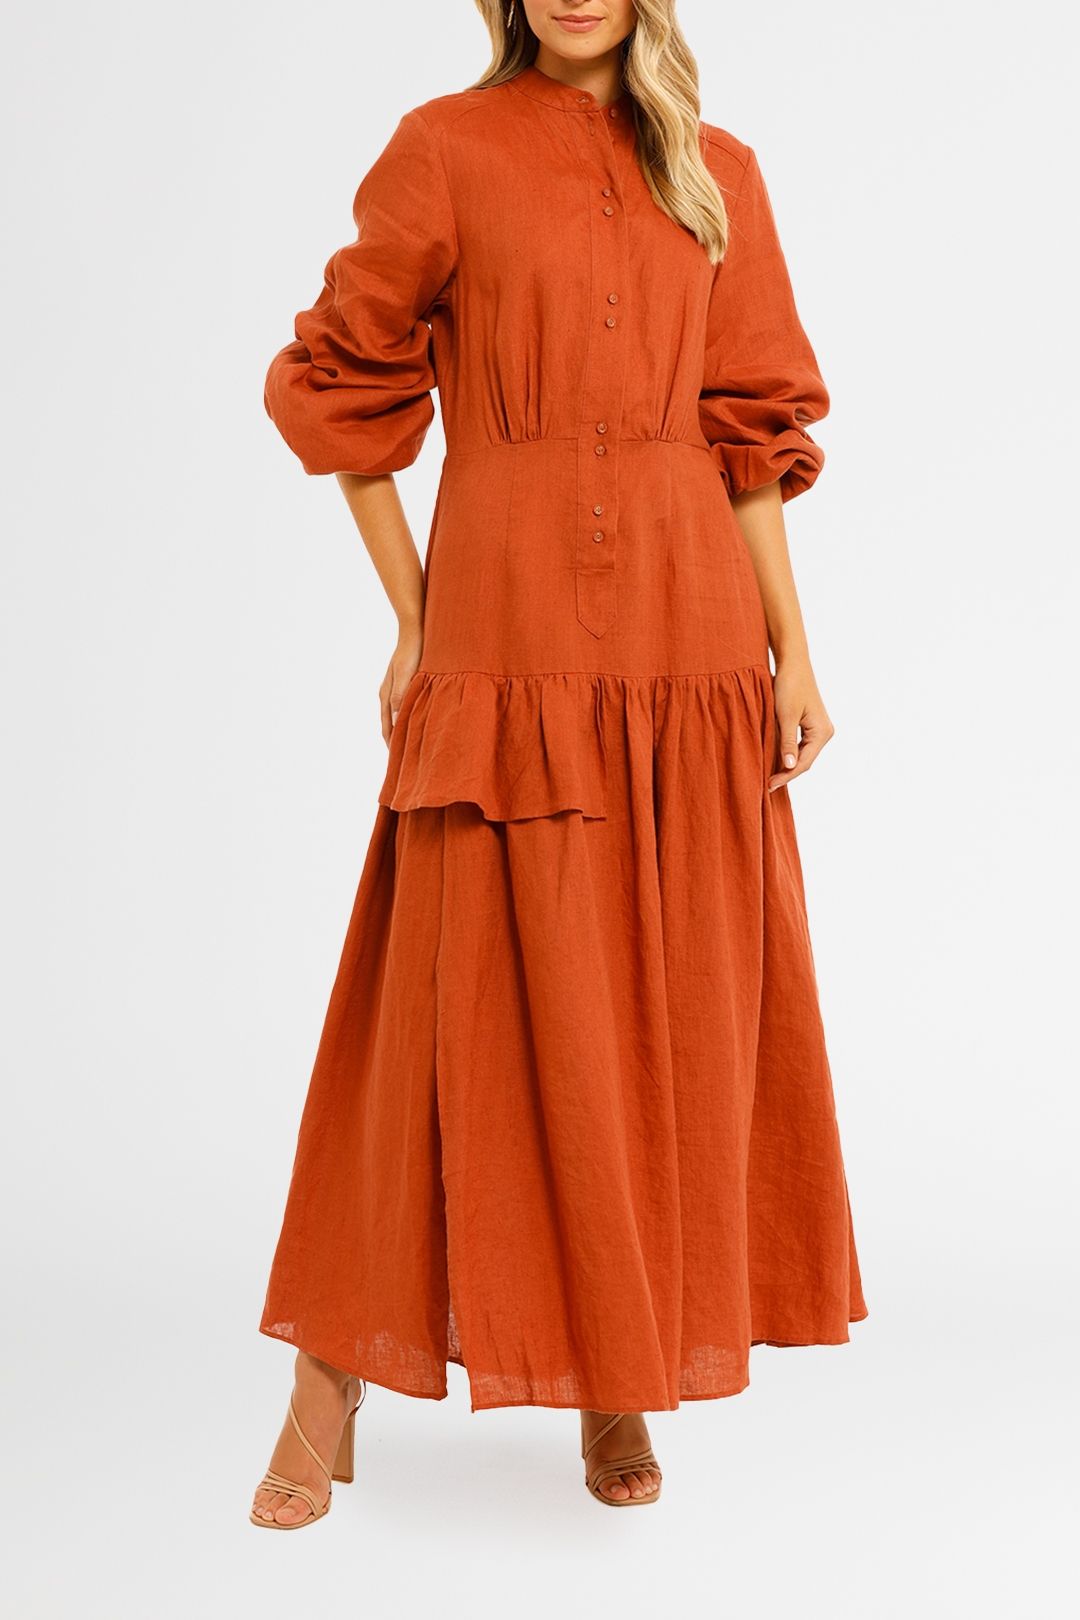 Pasduchas Dresses | Shop Women's Pasduchas Clothing Online